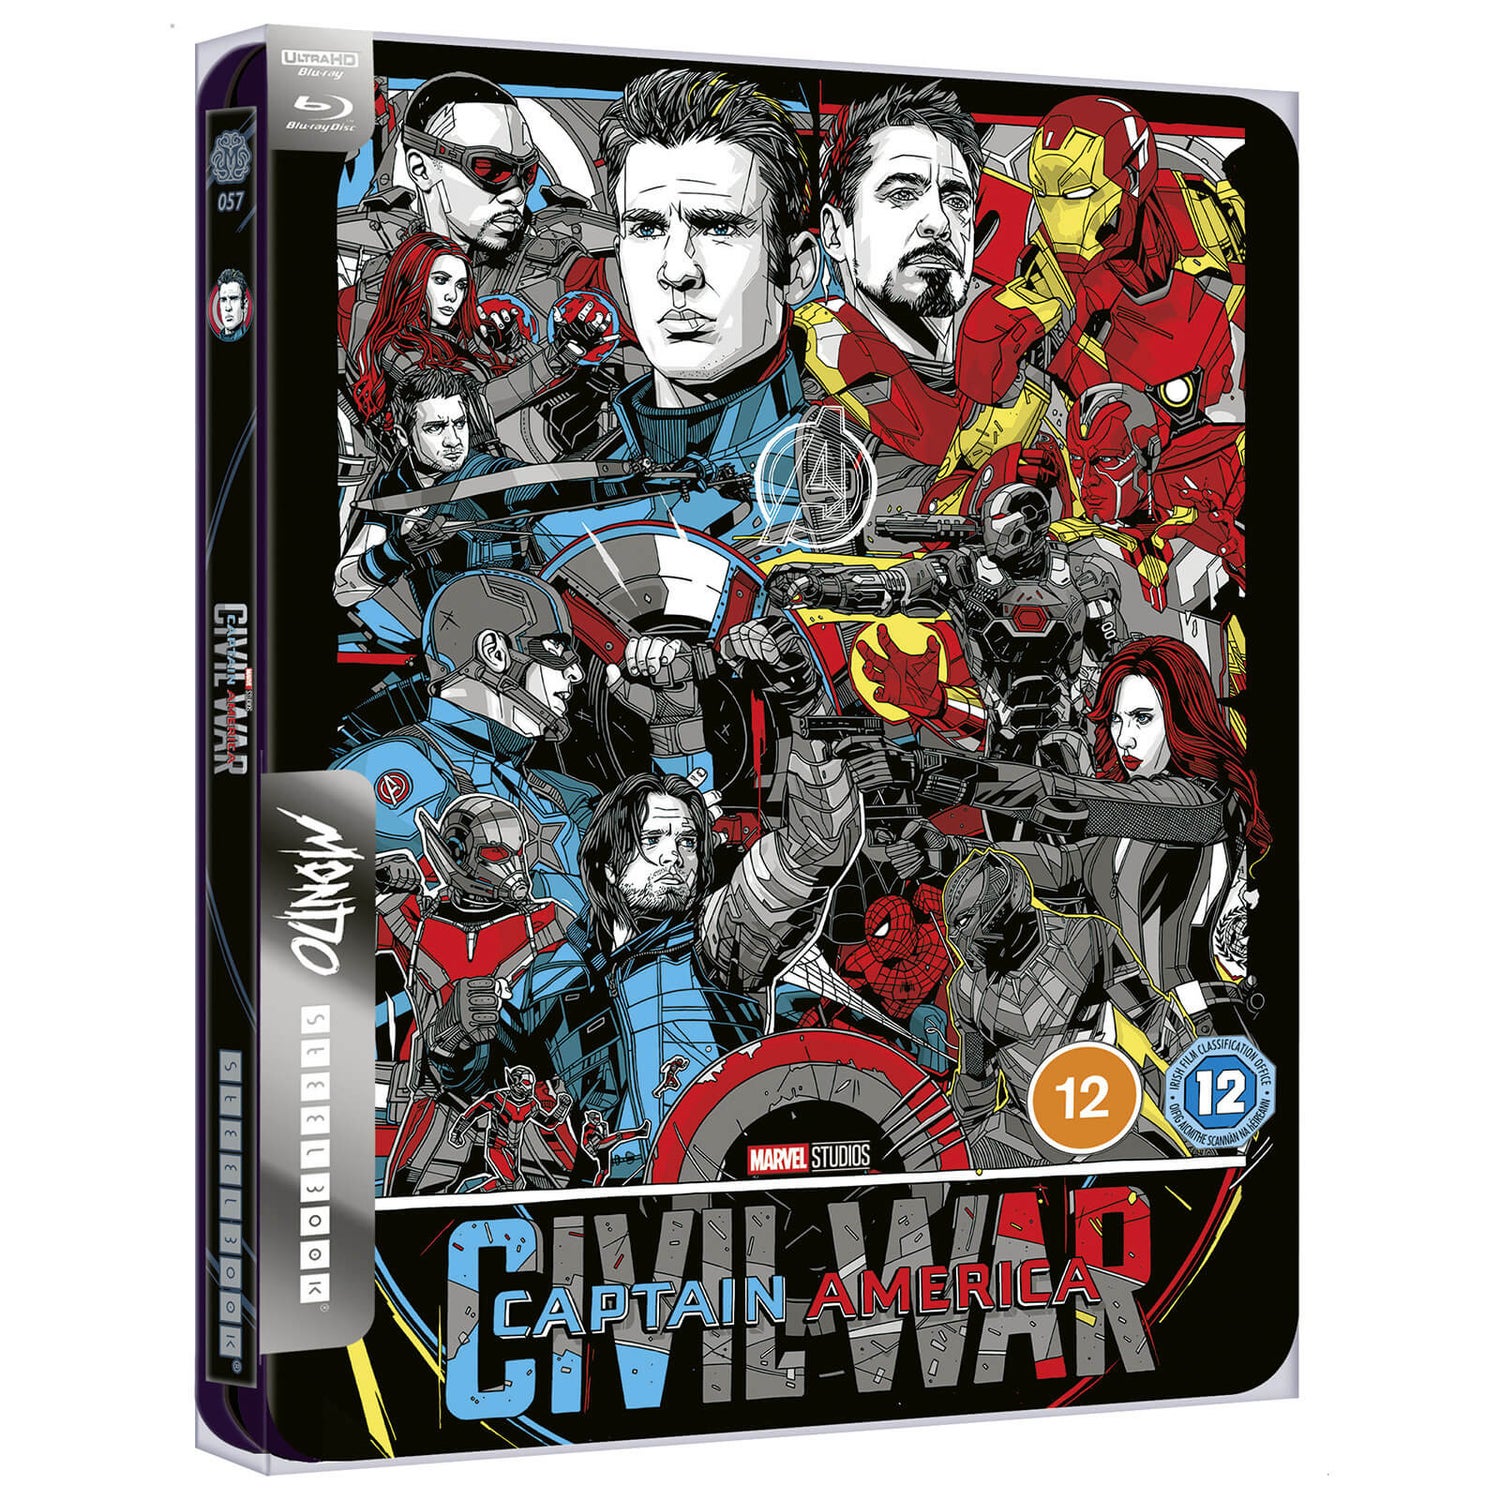 Star Wars Episode VII: The Force Awakens - Zavvi Exclusive 4K Ultra HD  Steelbook (3 Disc Edition Includes Blu-ray) 4K - Zavvi UK